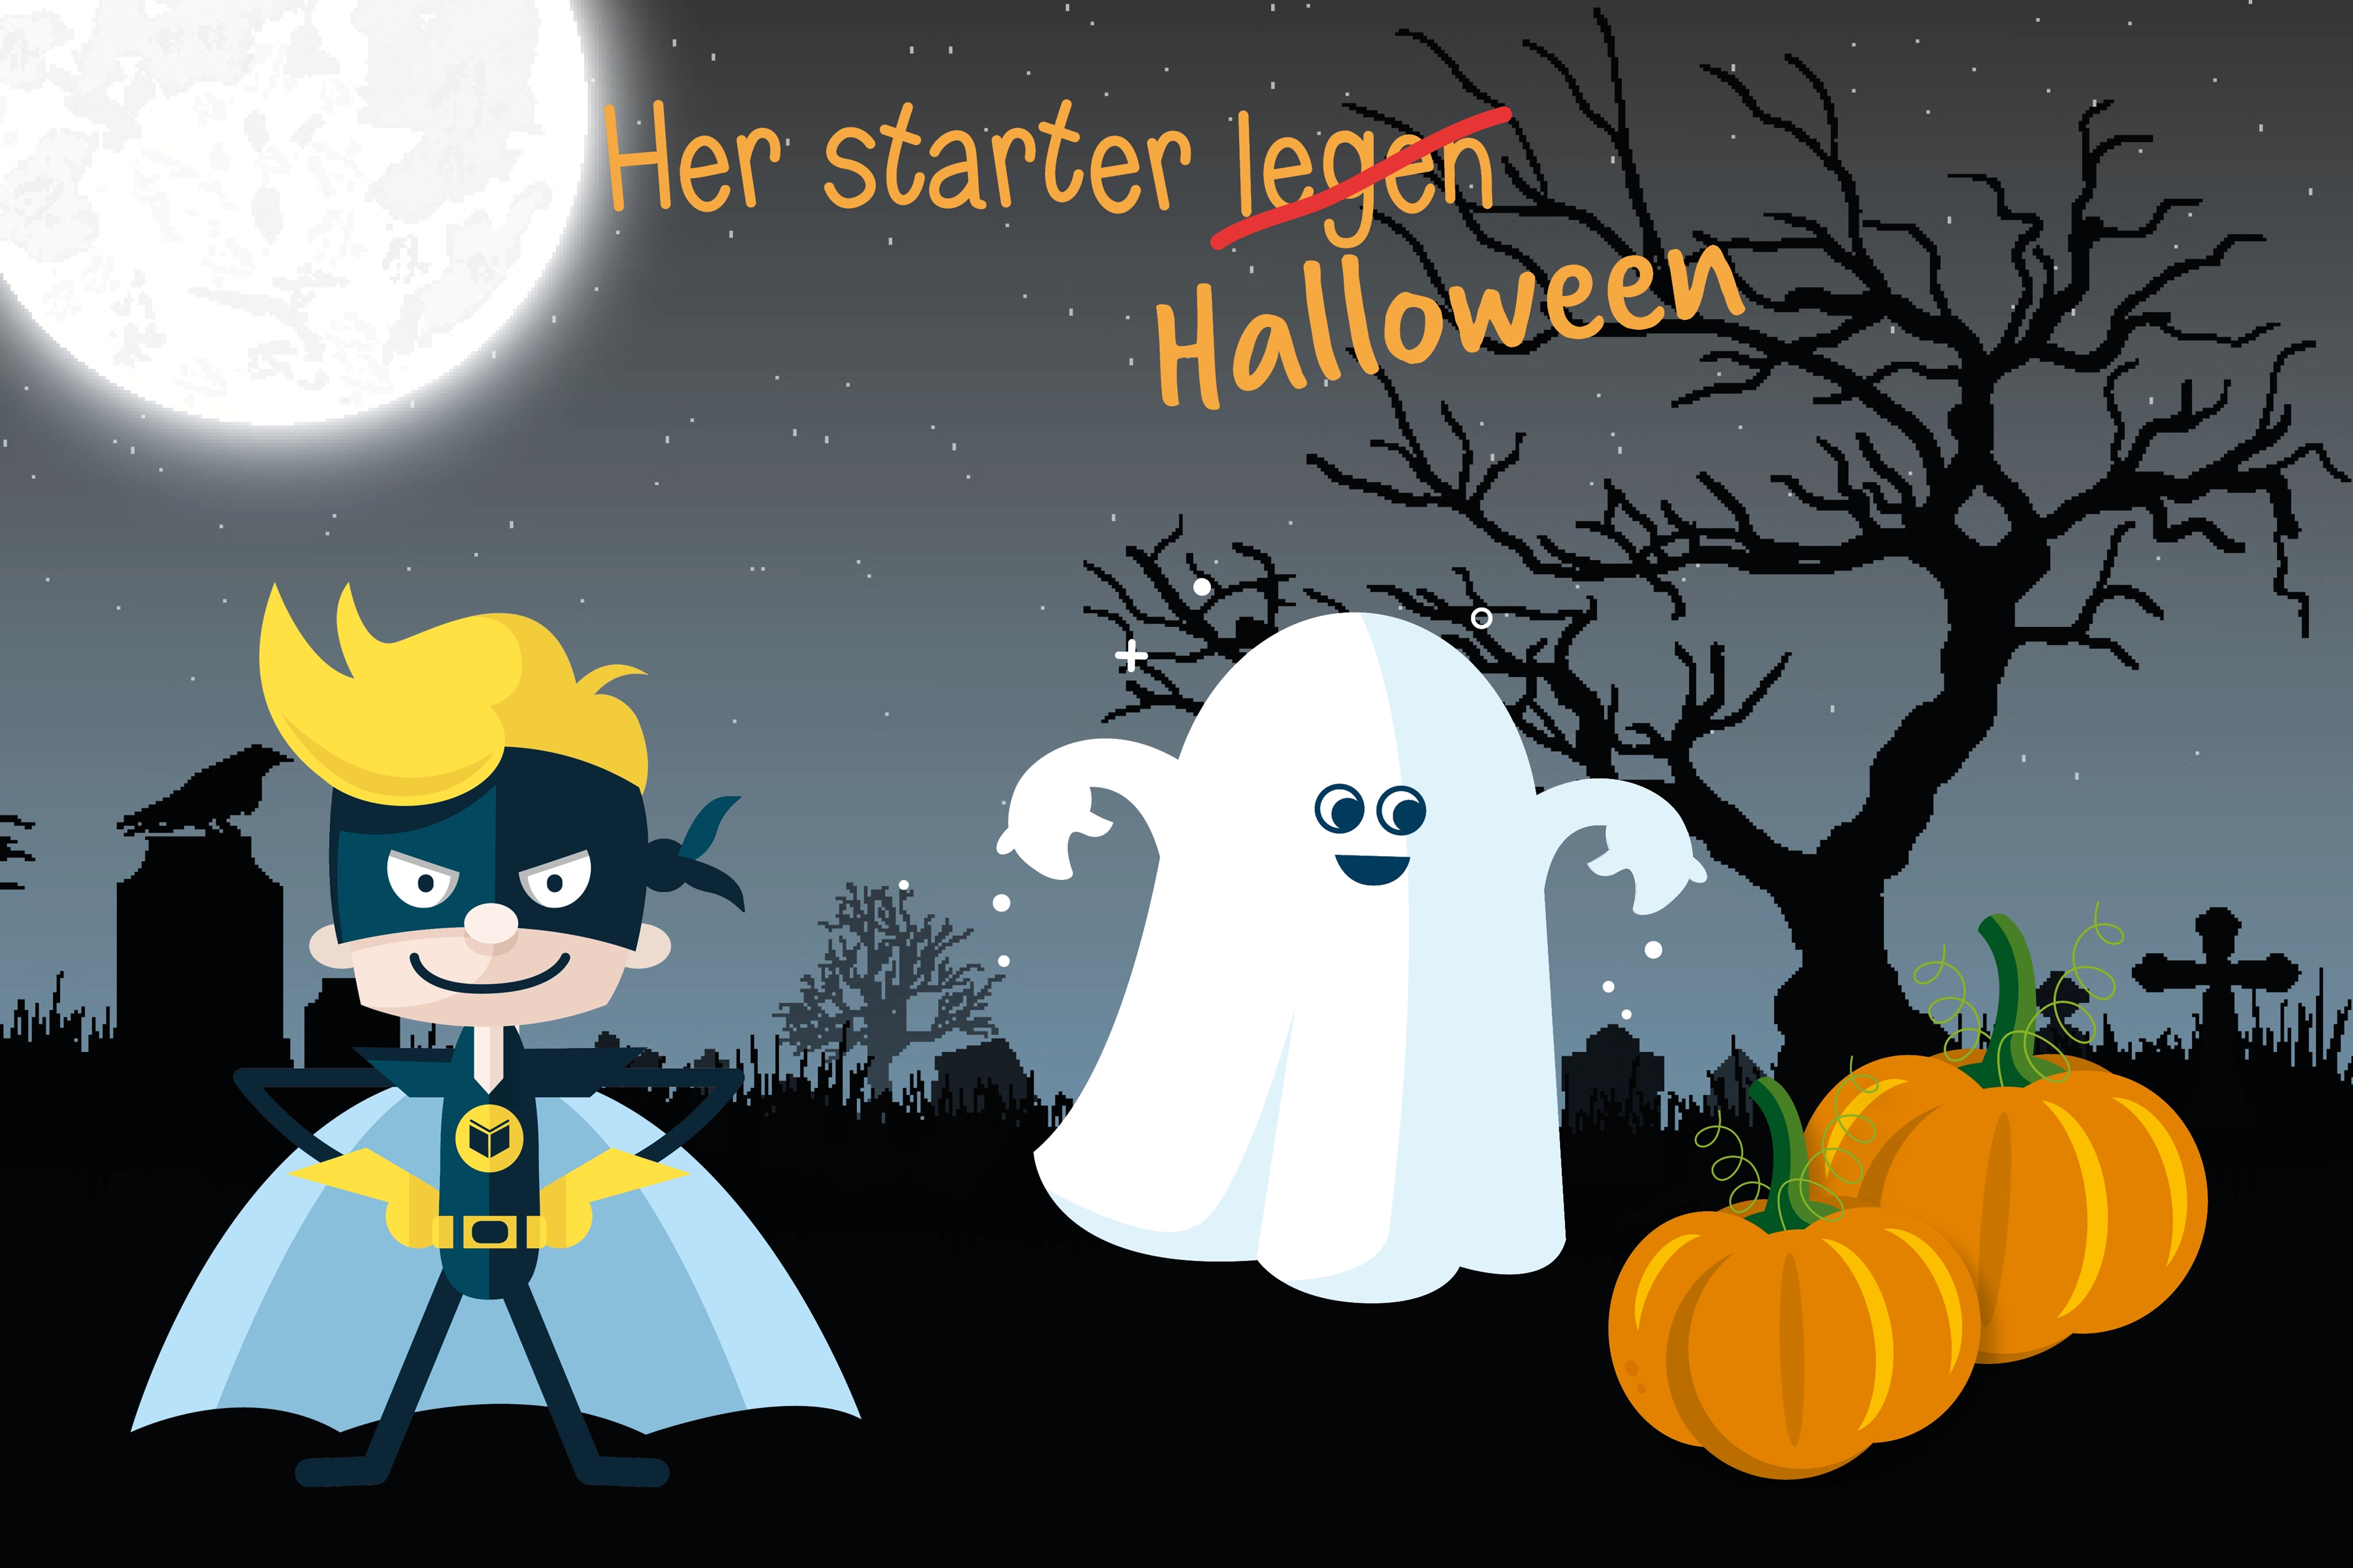 LEG_Web_Her starter legen_Halloween_Topbanner